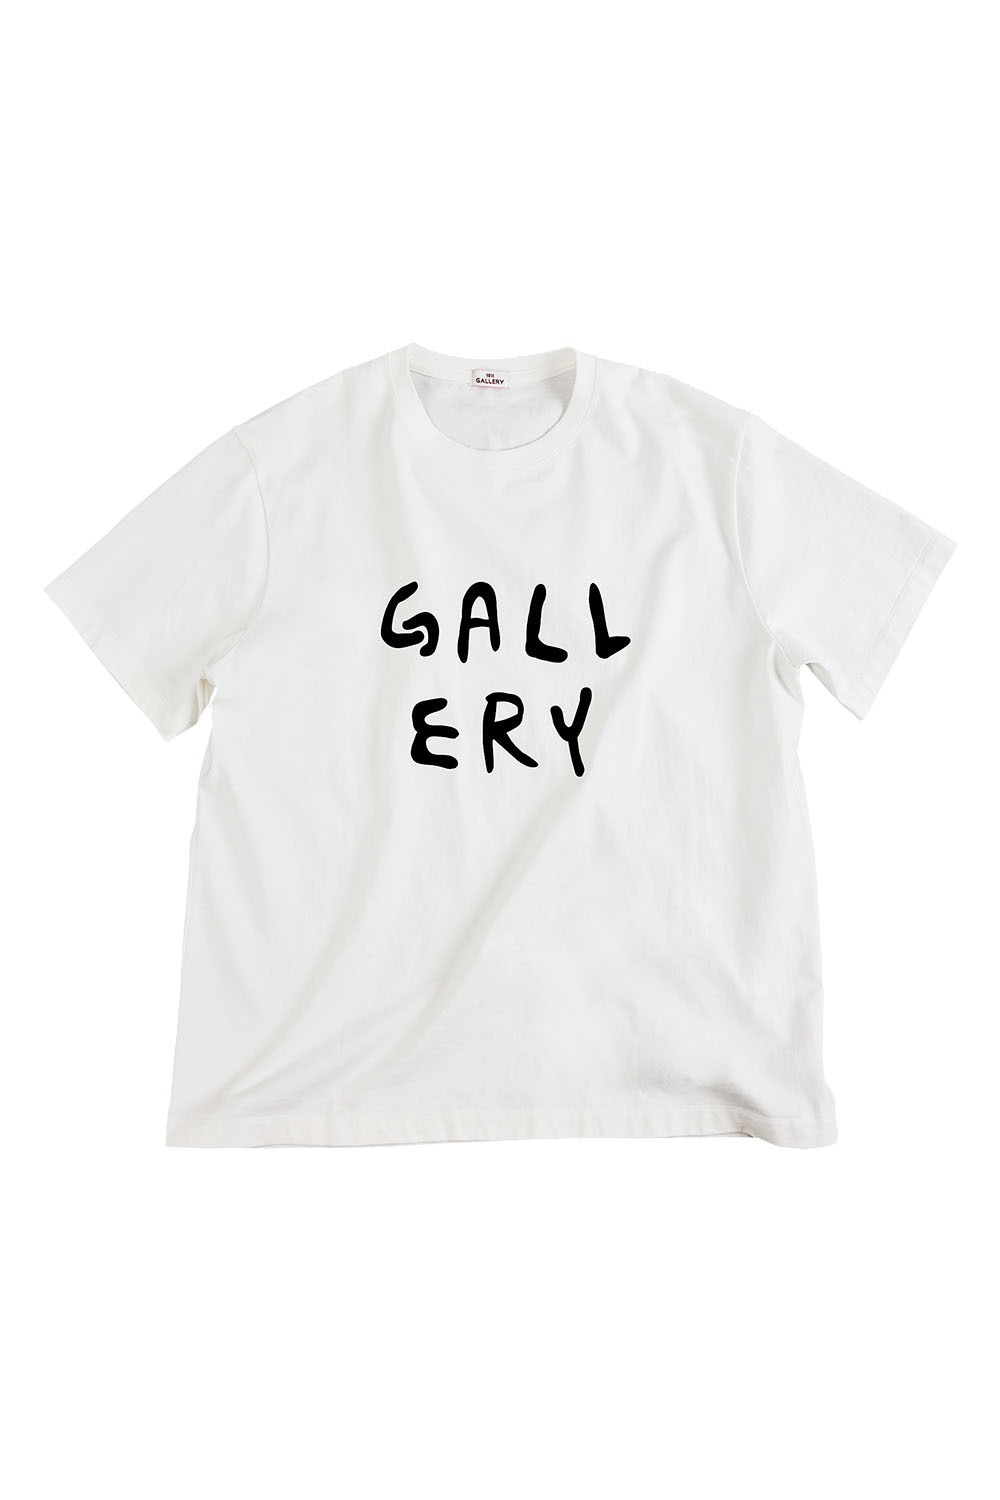 Gallery Logo T-shirt_White